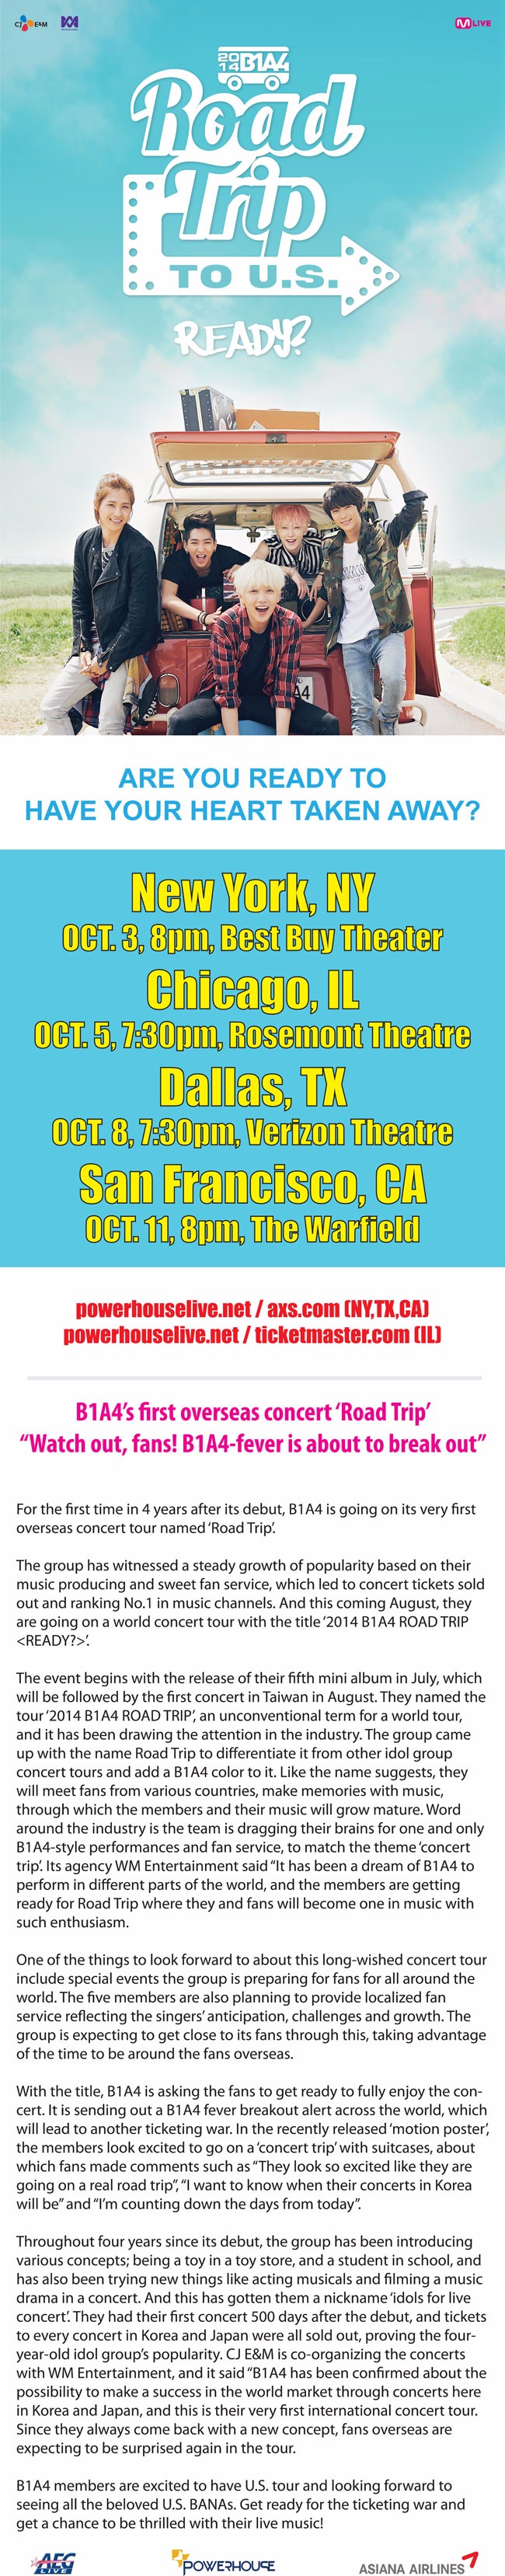 (16)2014 B1A4 US TOUR.jpg